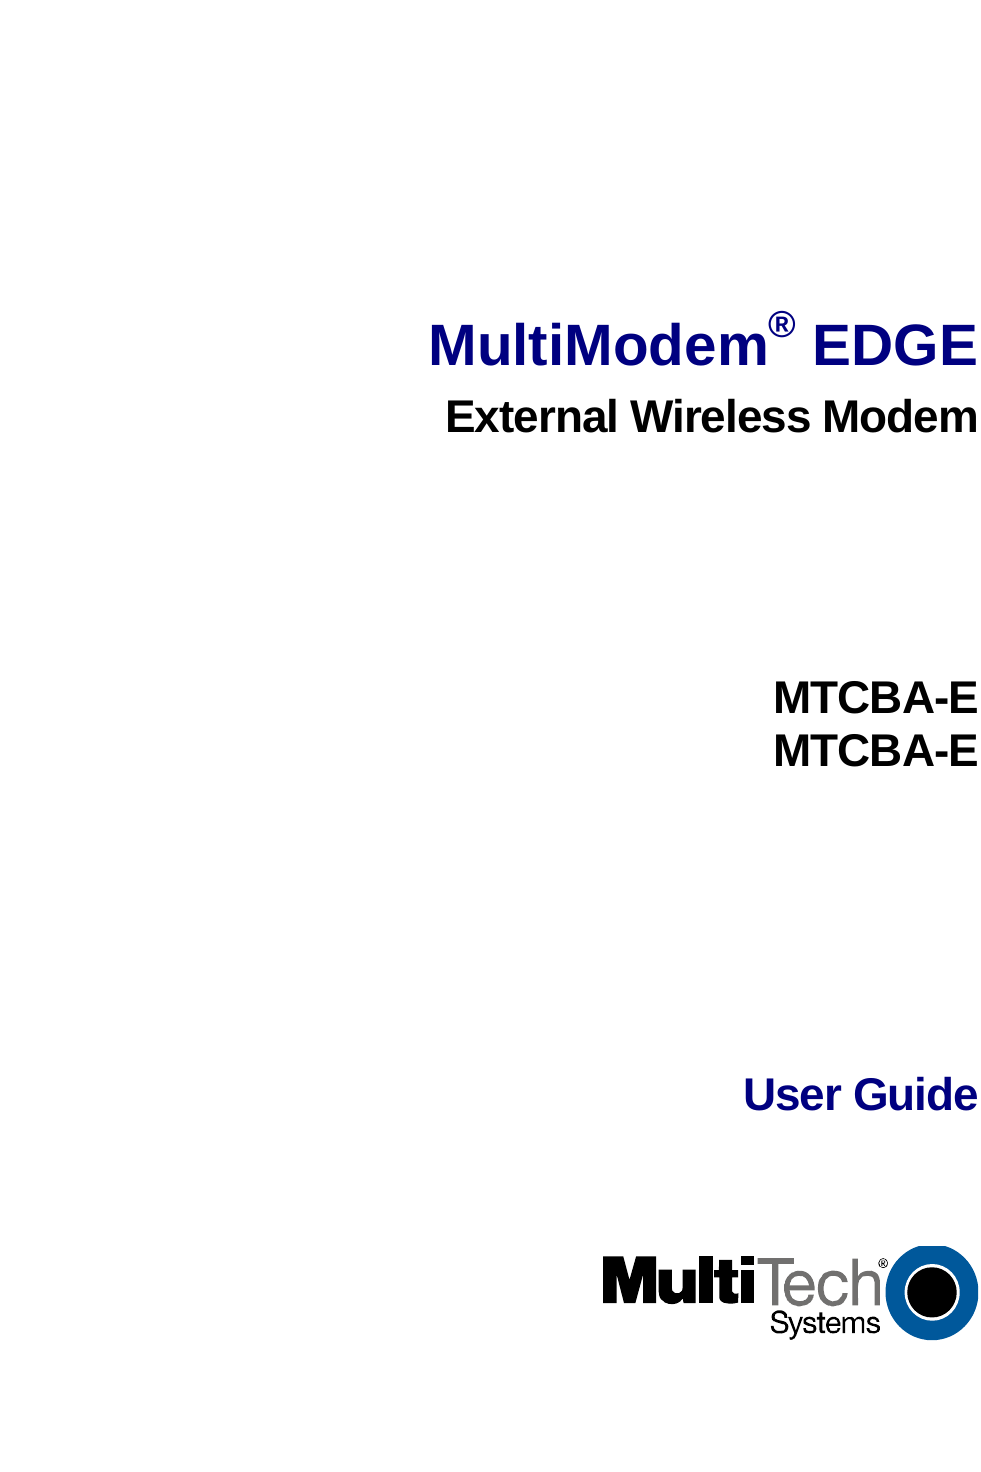                       MultiModem® EDGE External Wireless Modem        MTCBA-E MTCBA-E       User Guide     